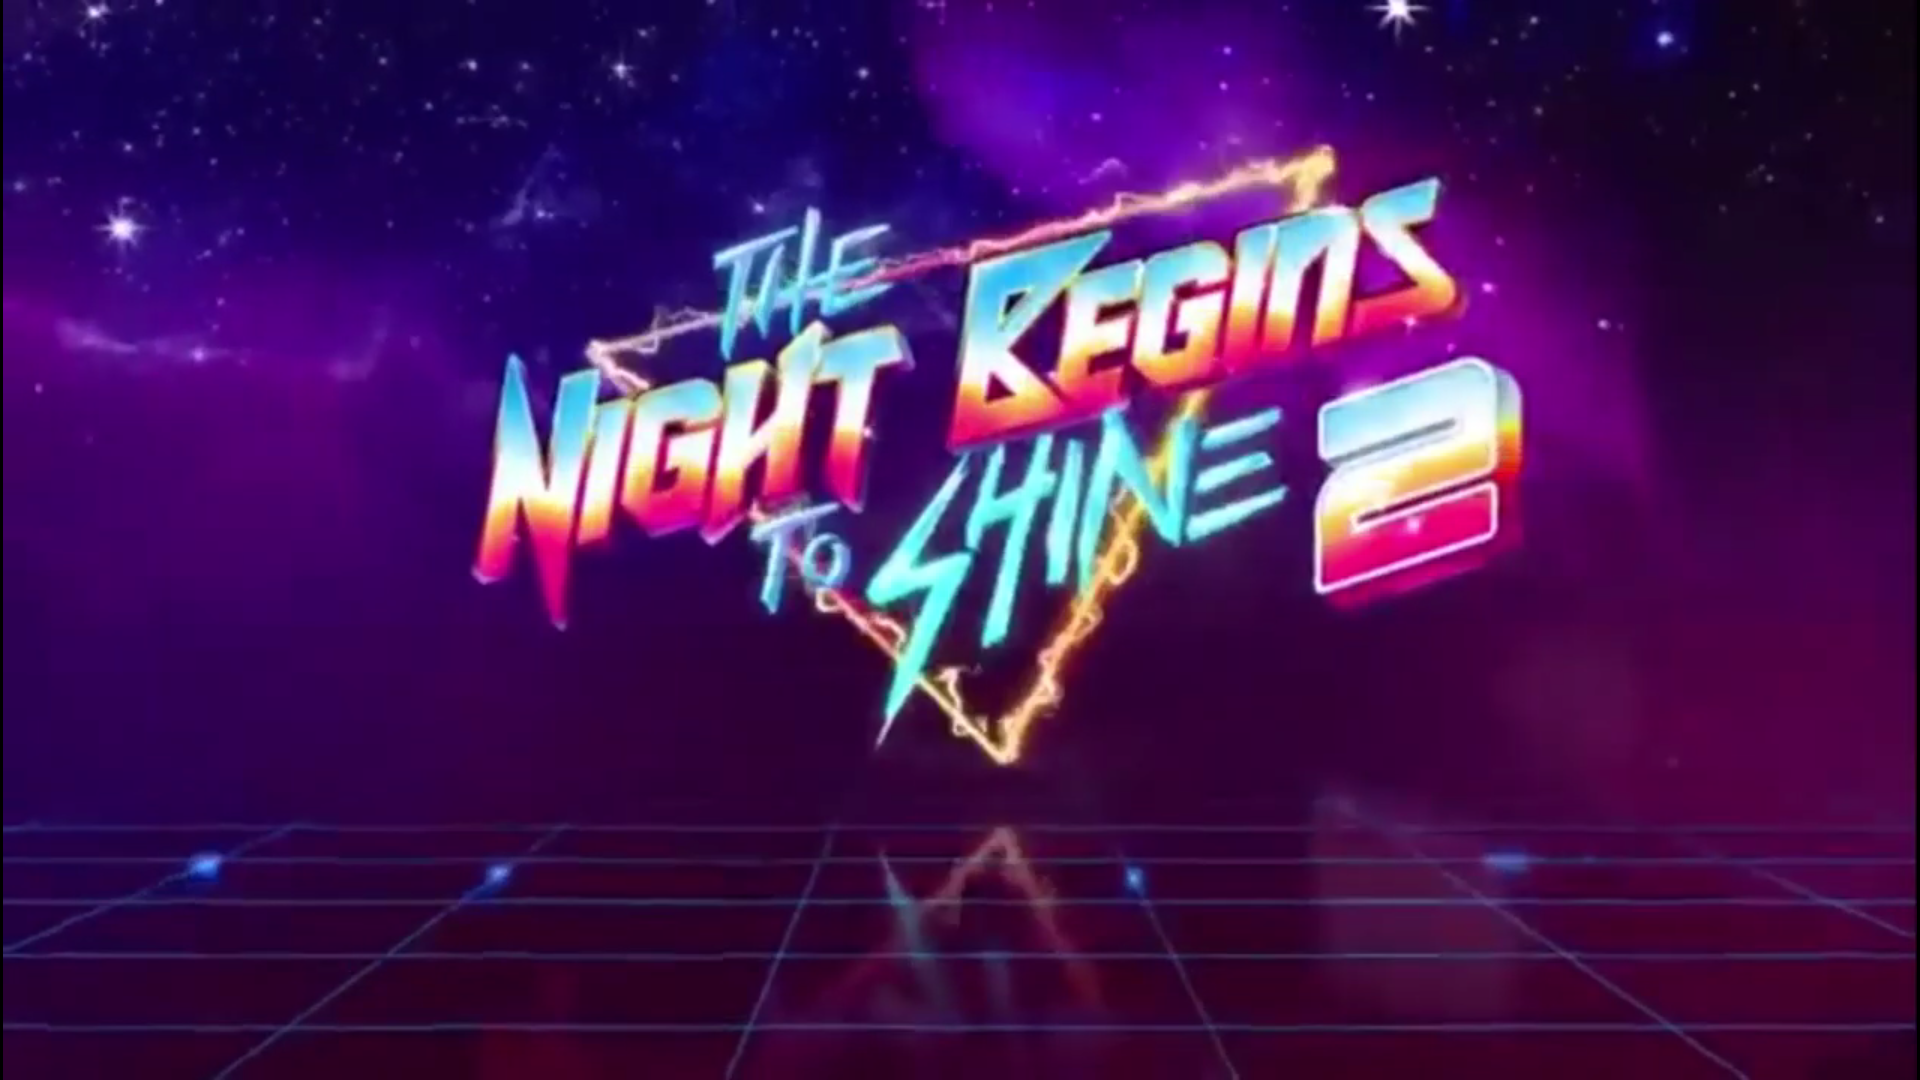 the night begins to shine song lyrics